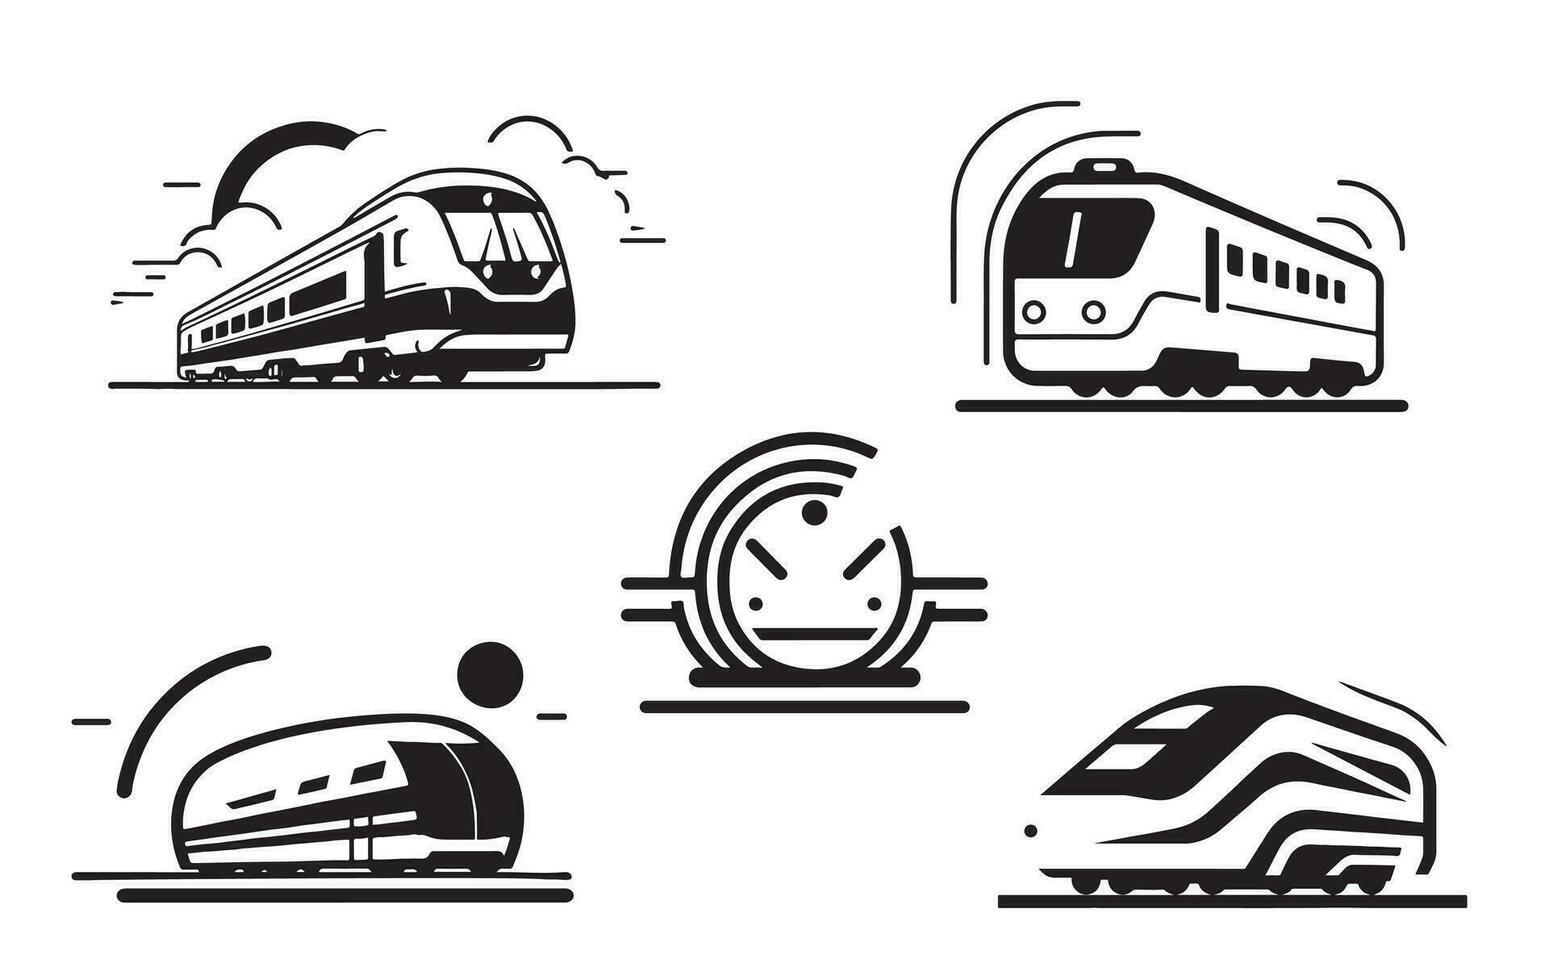 Logotype of the train, locomotive. Vector flat icon.